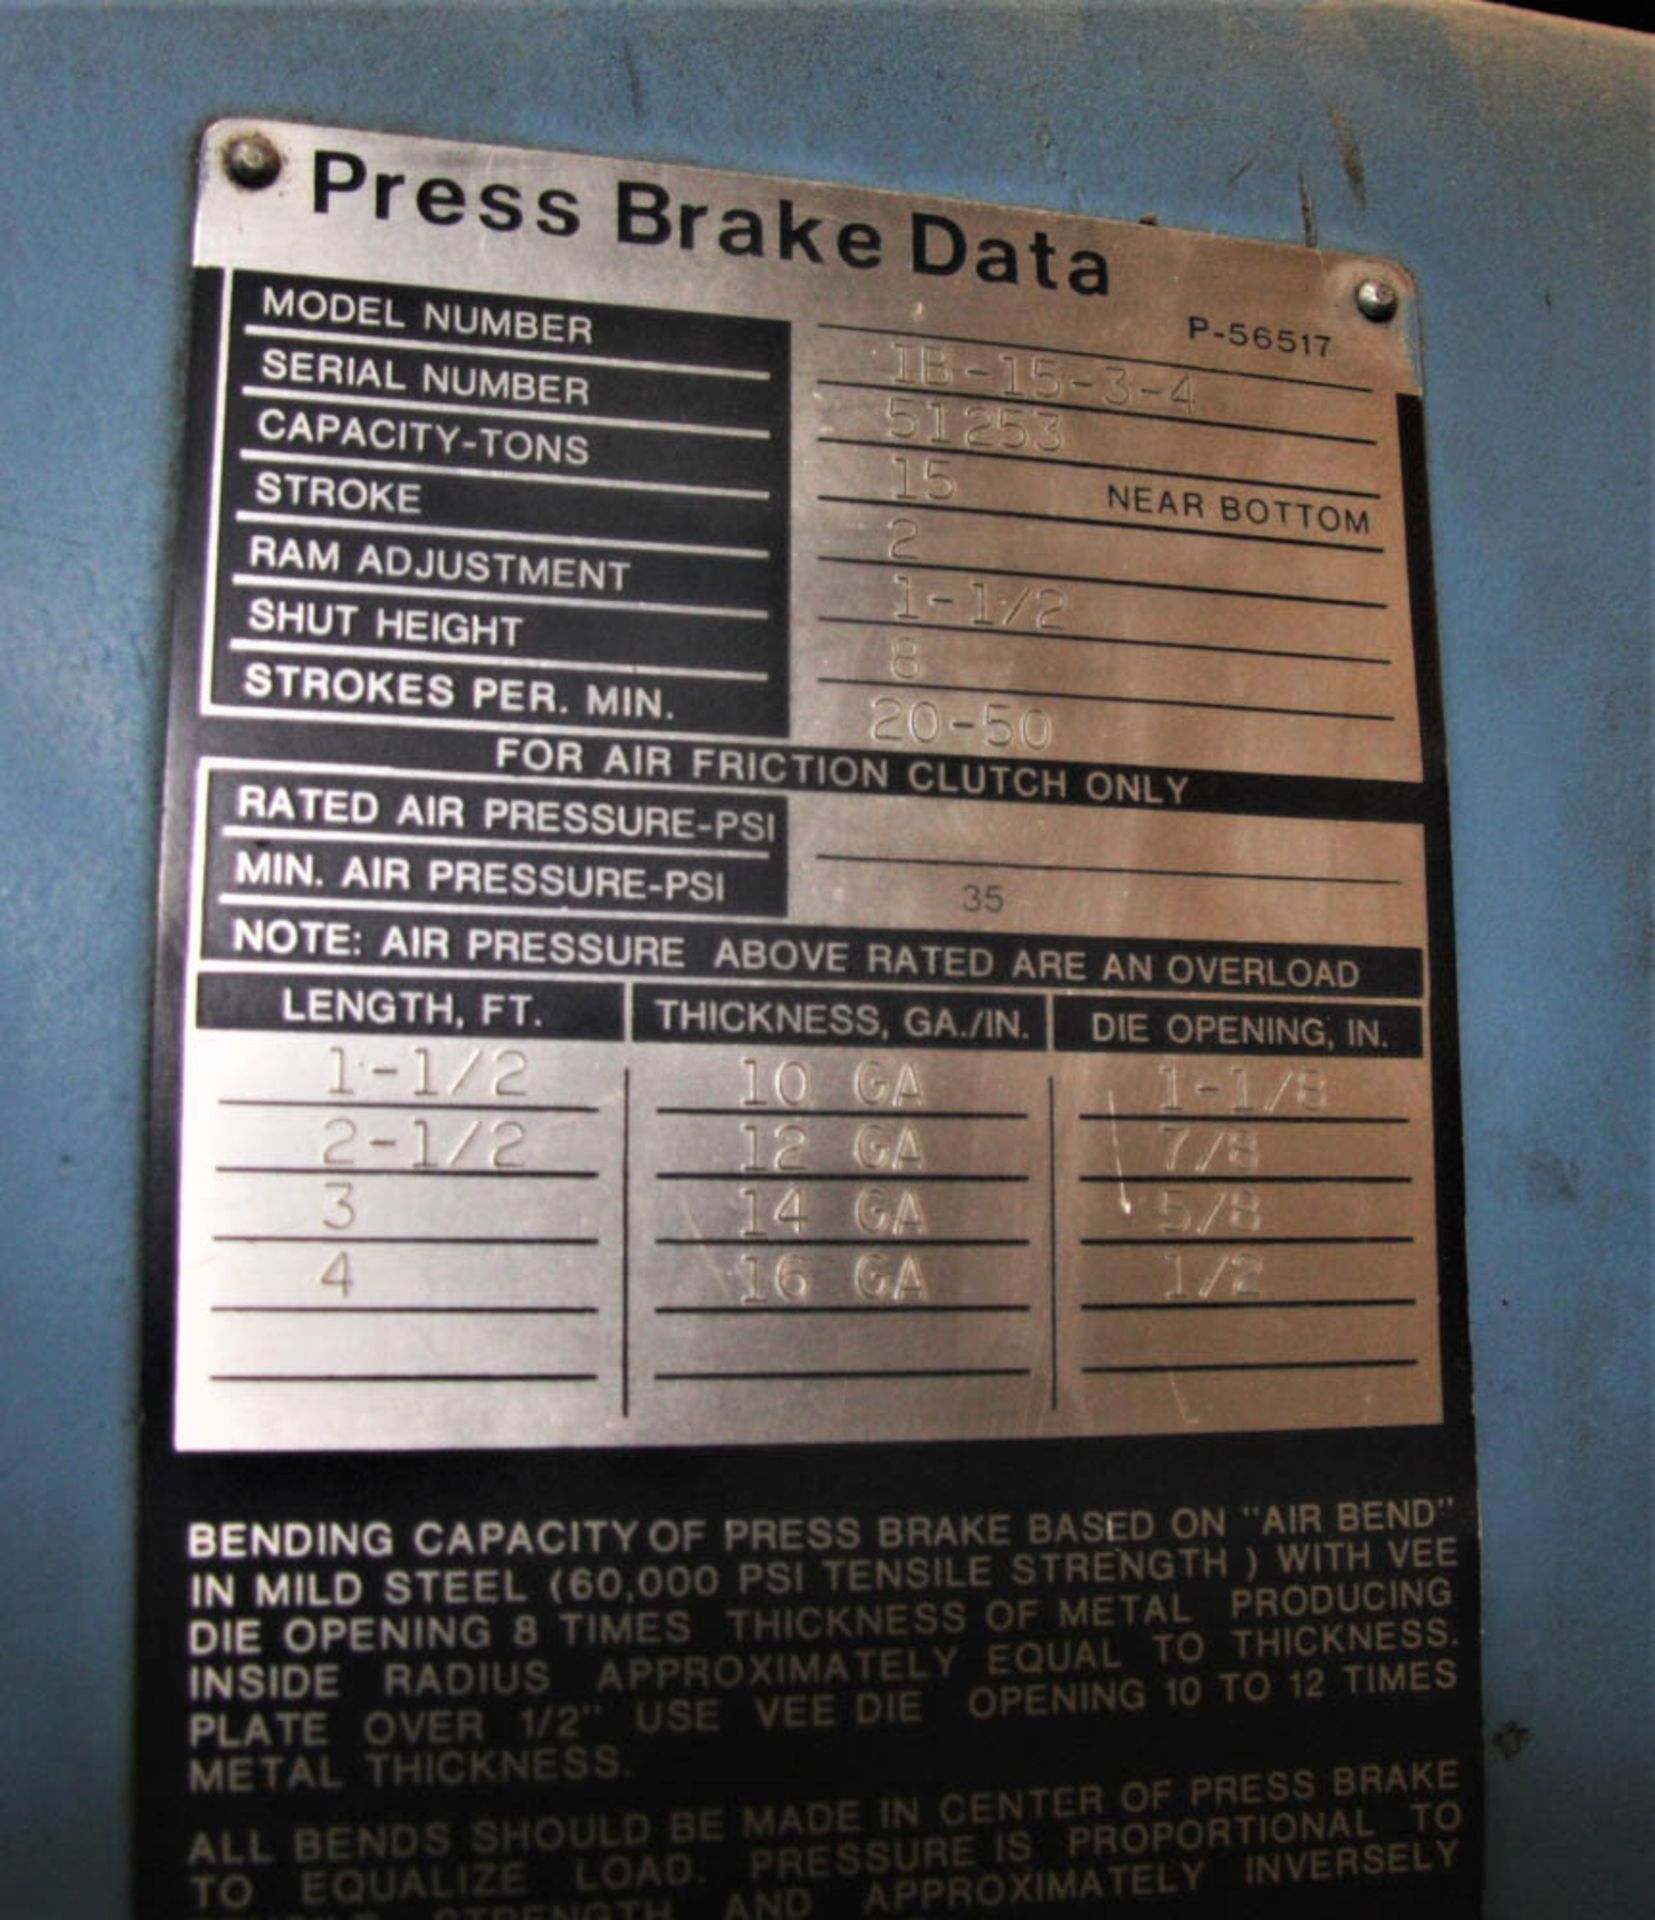 15 TON X 4' NIAGARA IB-15-3-4 MECHANICAL PRESS BRAKE, W/ 2" STROKE, 1-1/2" RAM ADJUSTMENT, 8" SHUT - Image 4 of 7